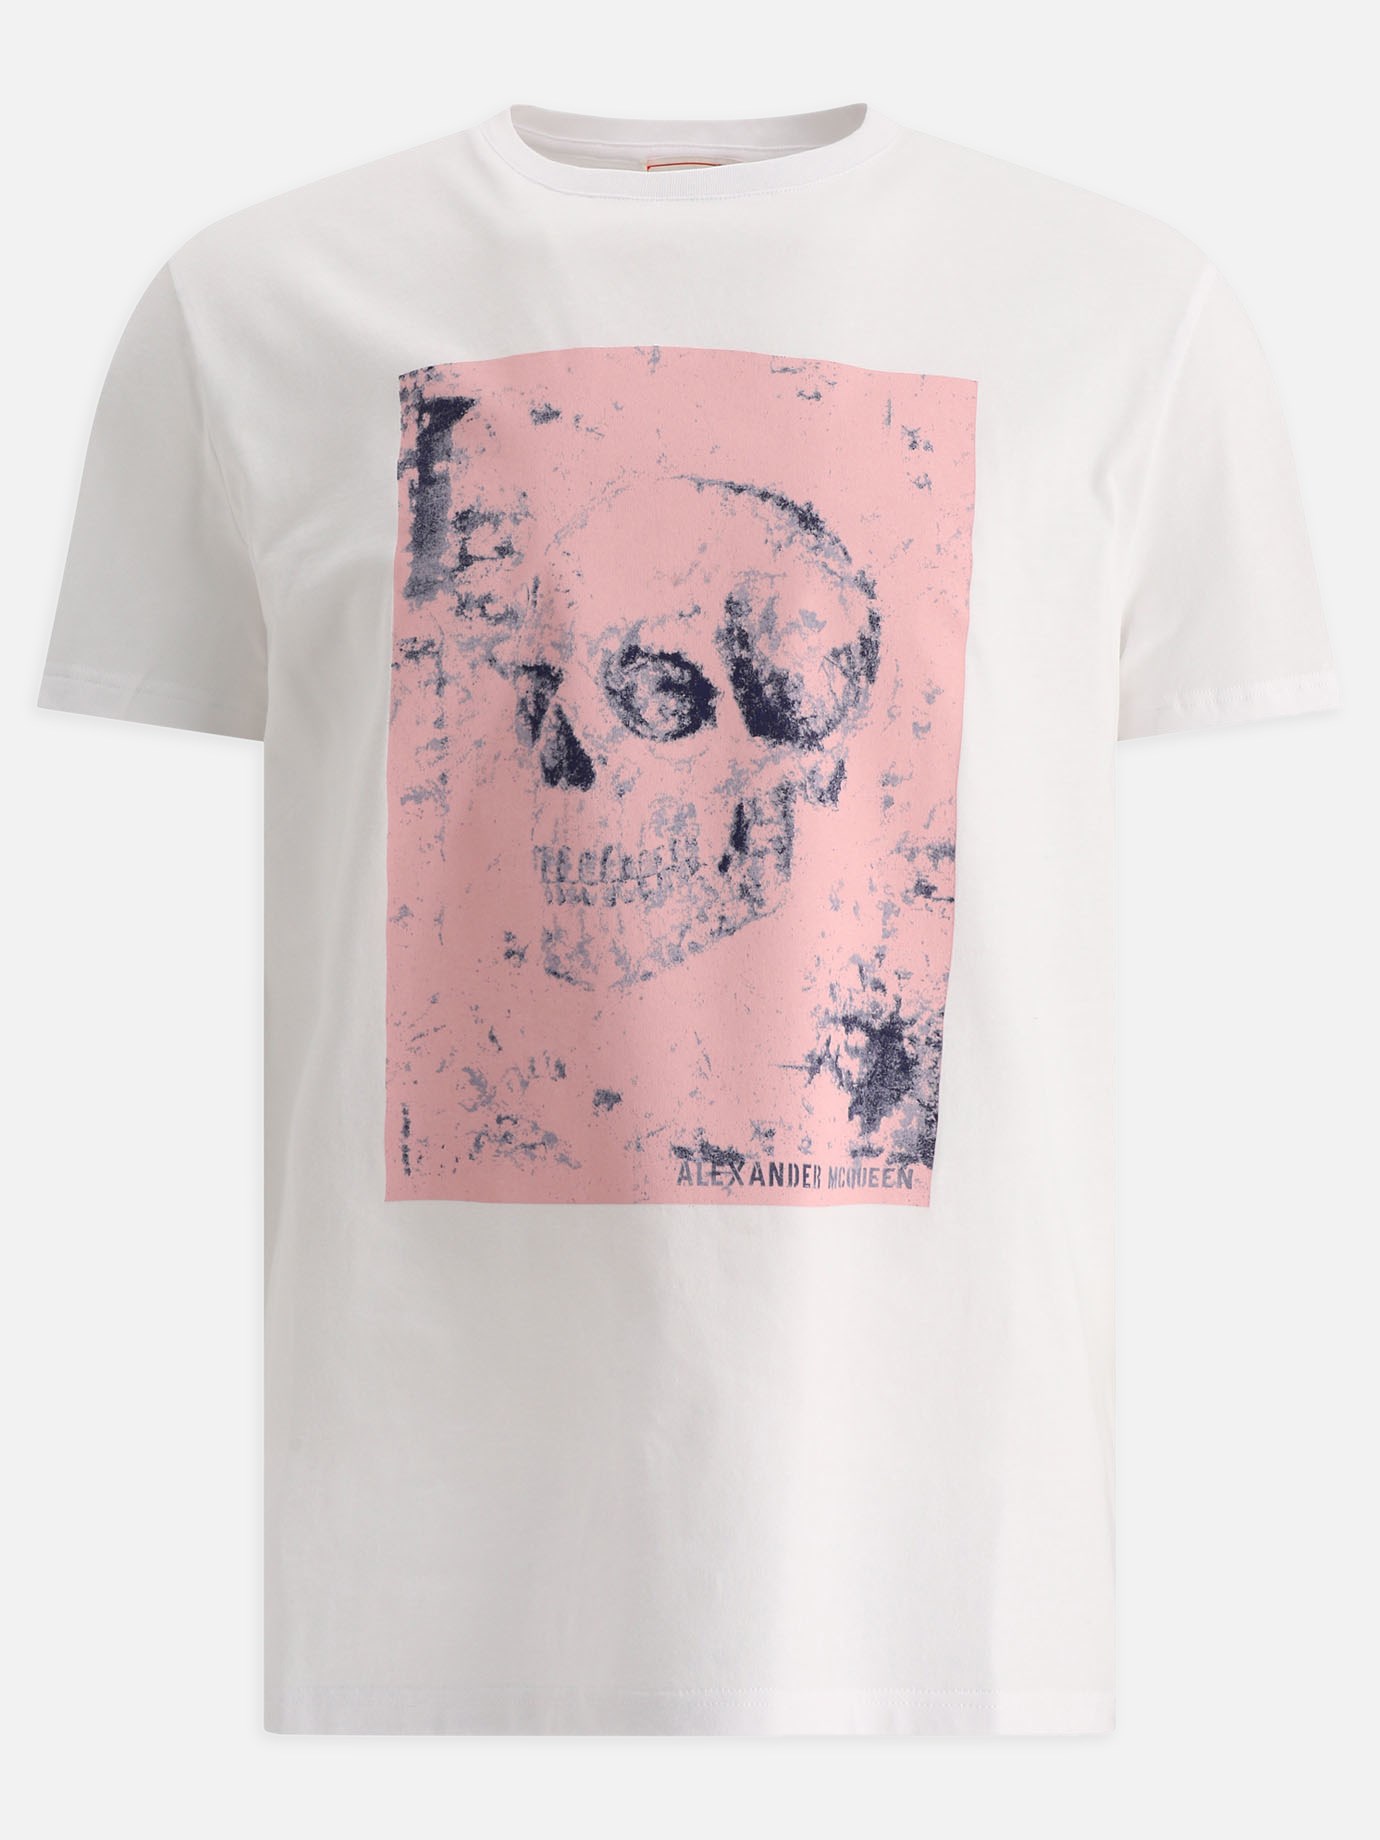  Skull  t-shirt by Alexander McQueen